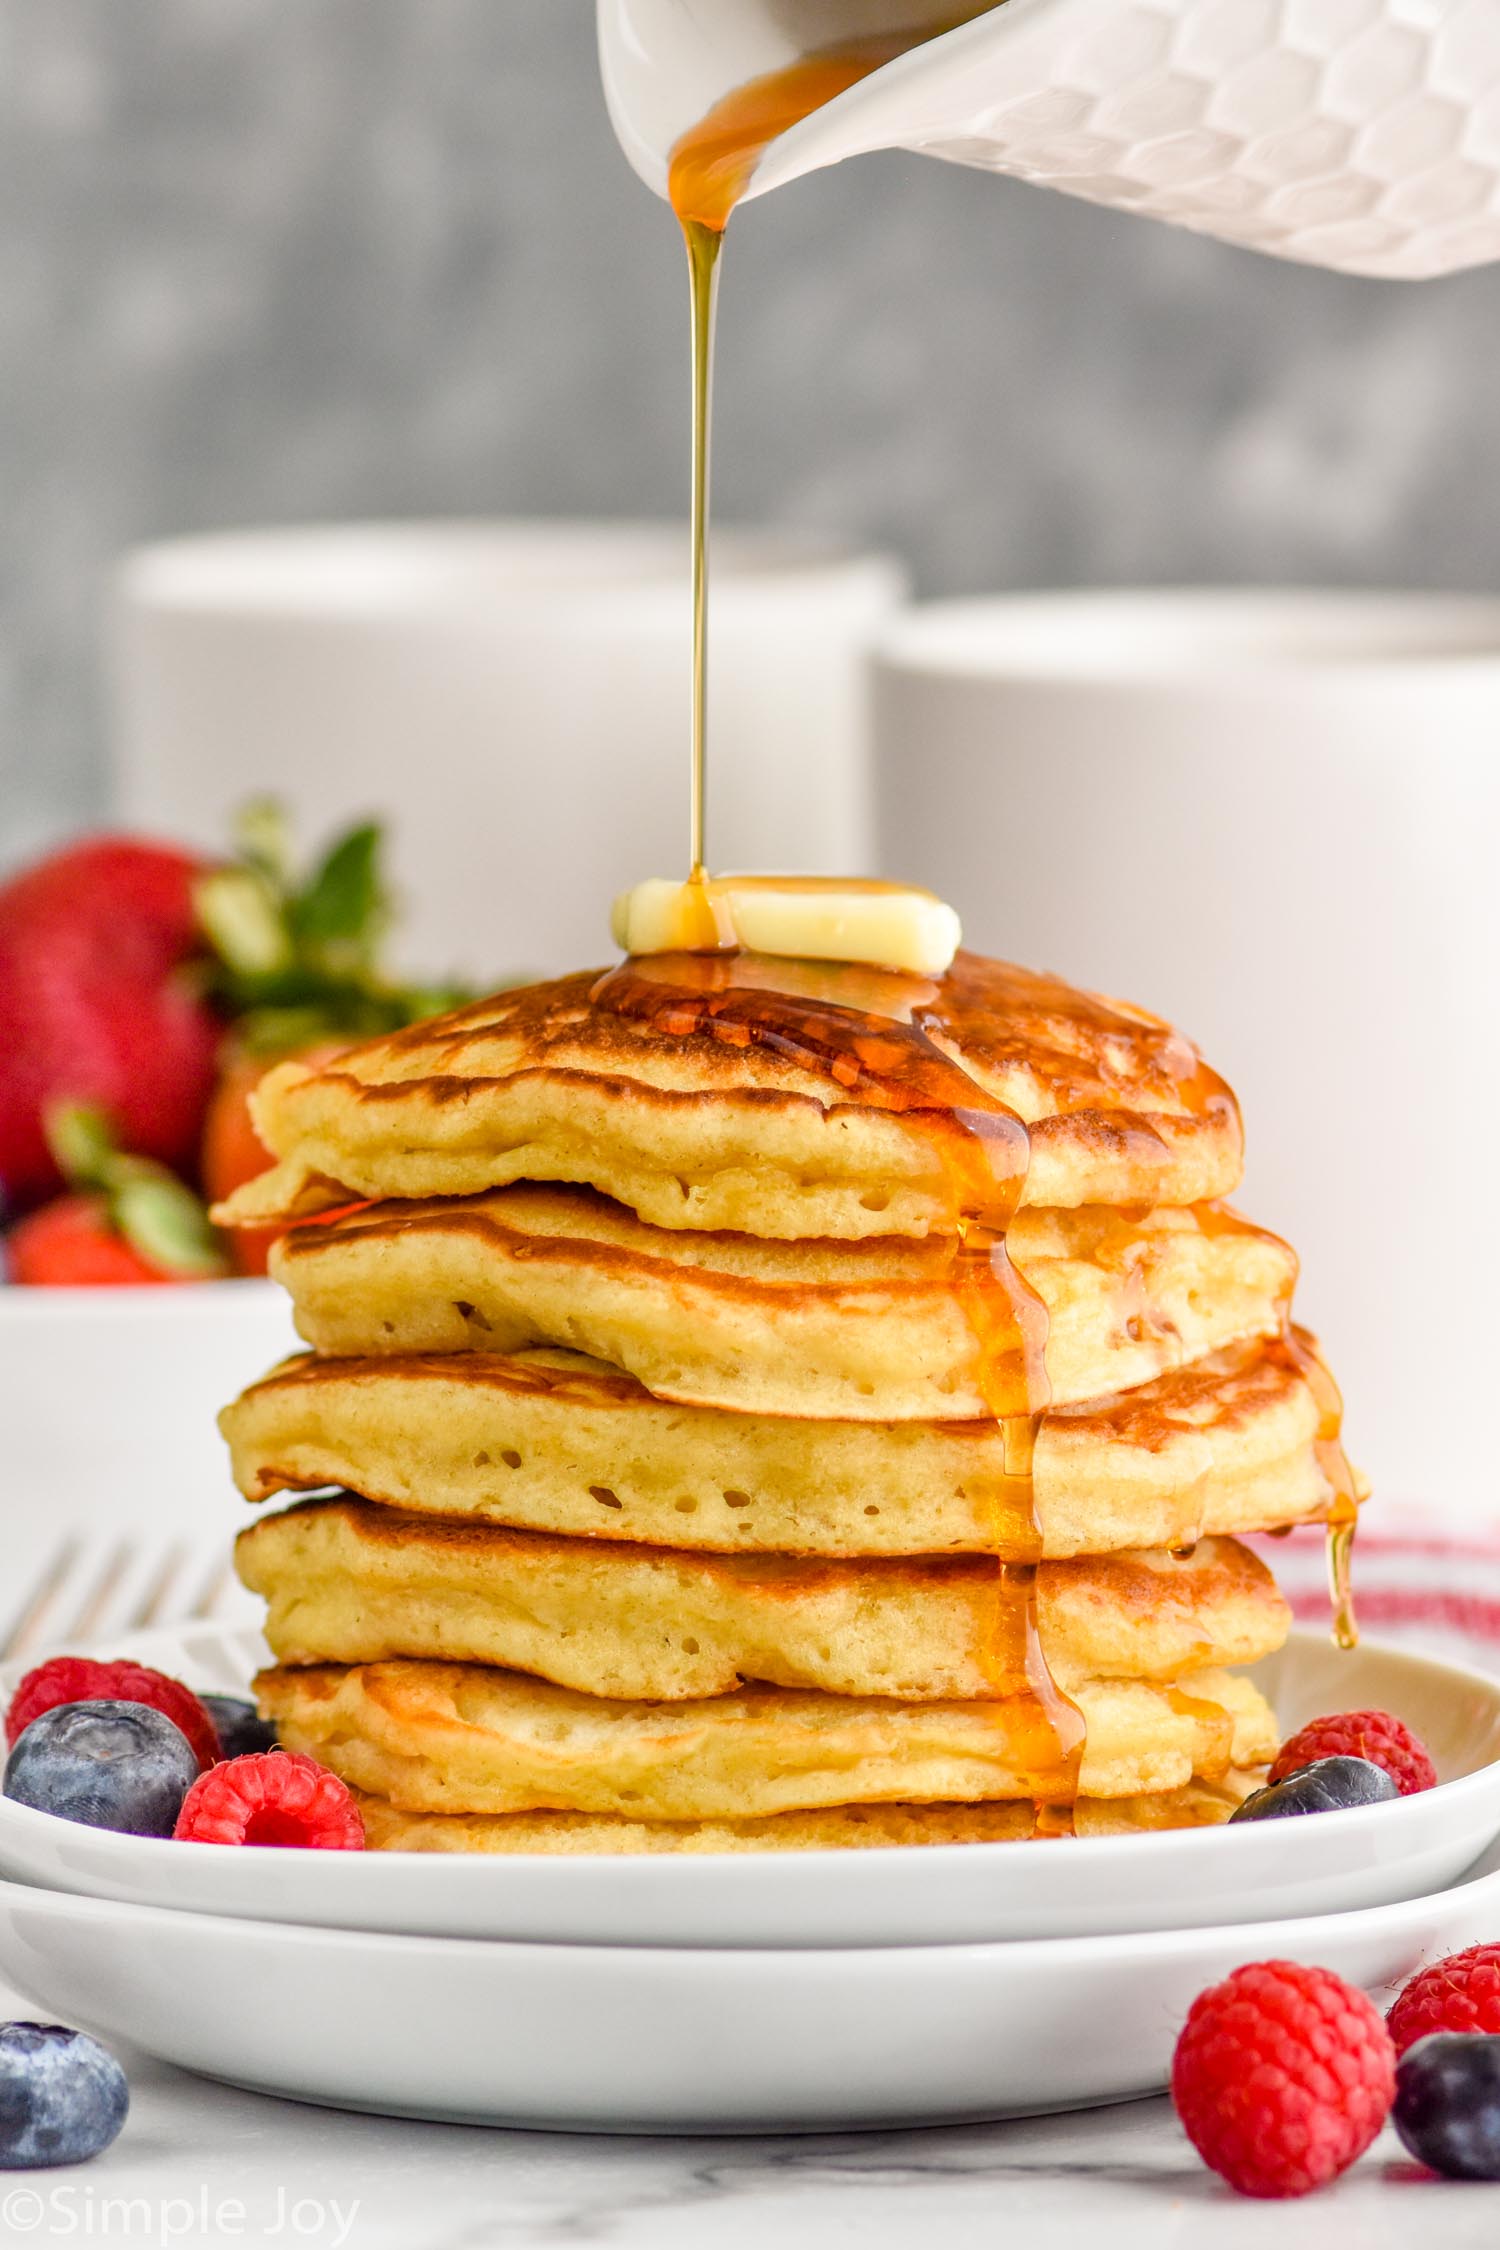 https://www.simplejoy.com/wp-content/uploads/2017/12/buttermilk-pancakes.jpg